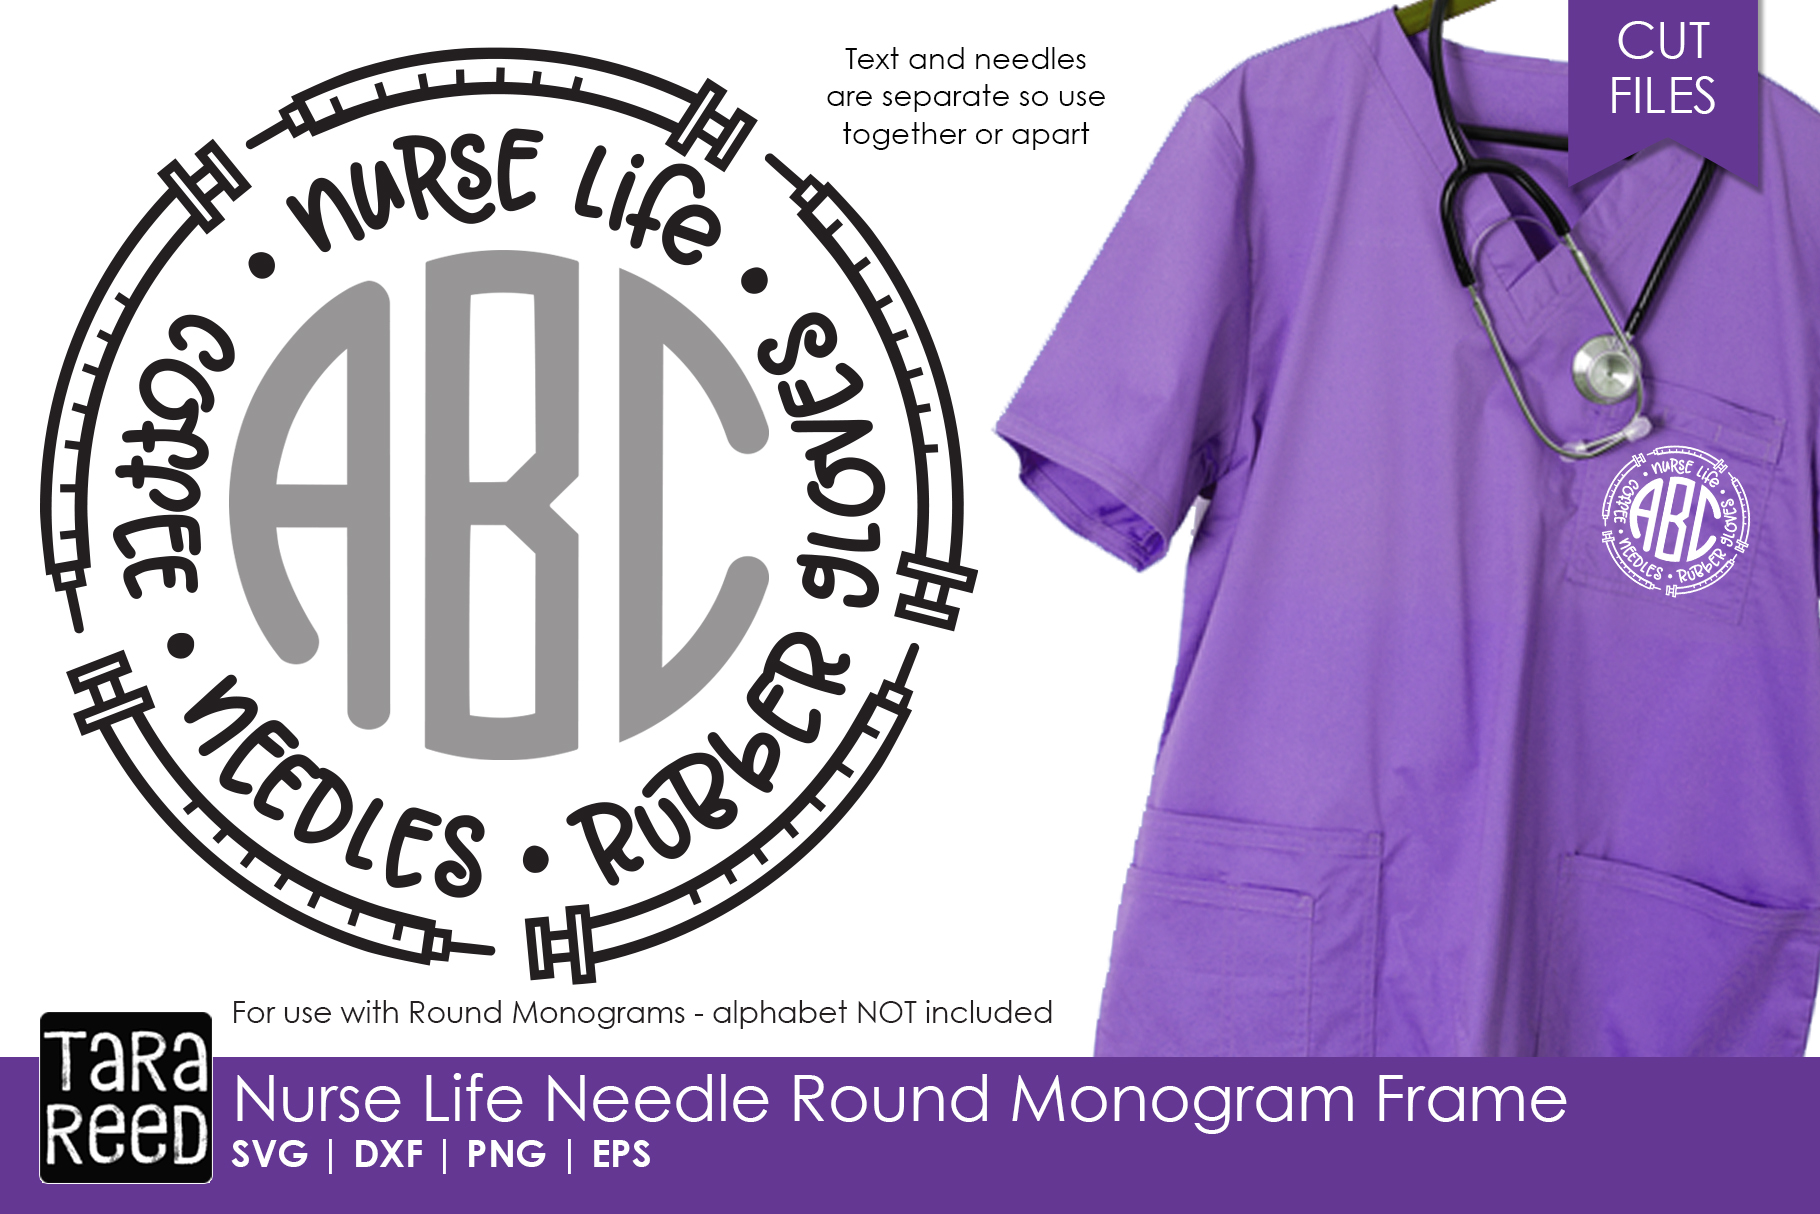 Download Nurse Needle Round Monogram Frame - Nursing SVG & Cut Files (251889) | Cut Files | Design Bundles